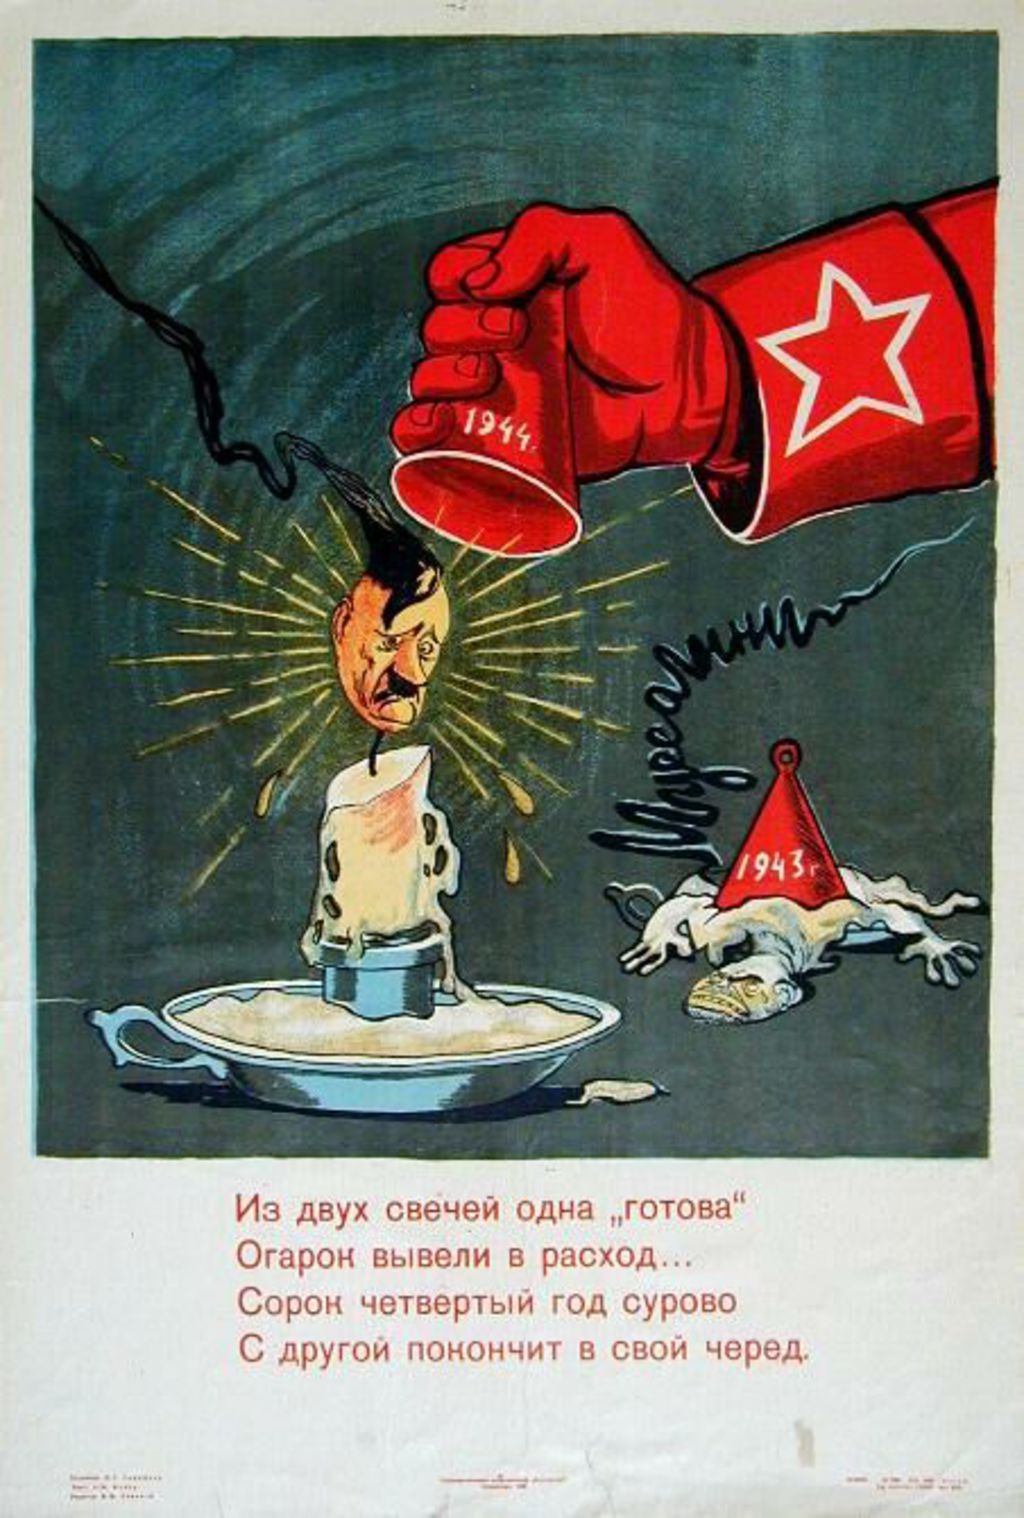 Exponat: Plakat: Sowjetisches Propagandaplakat mit politischer Karikatur, 1943